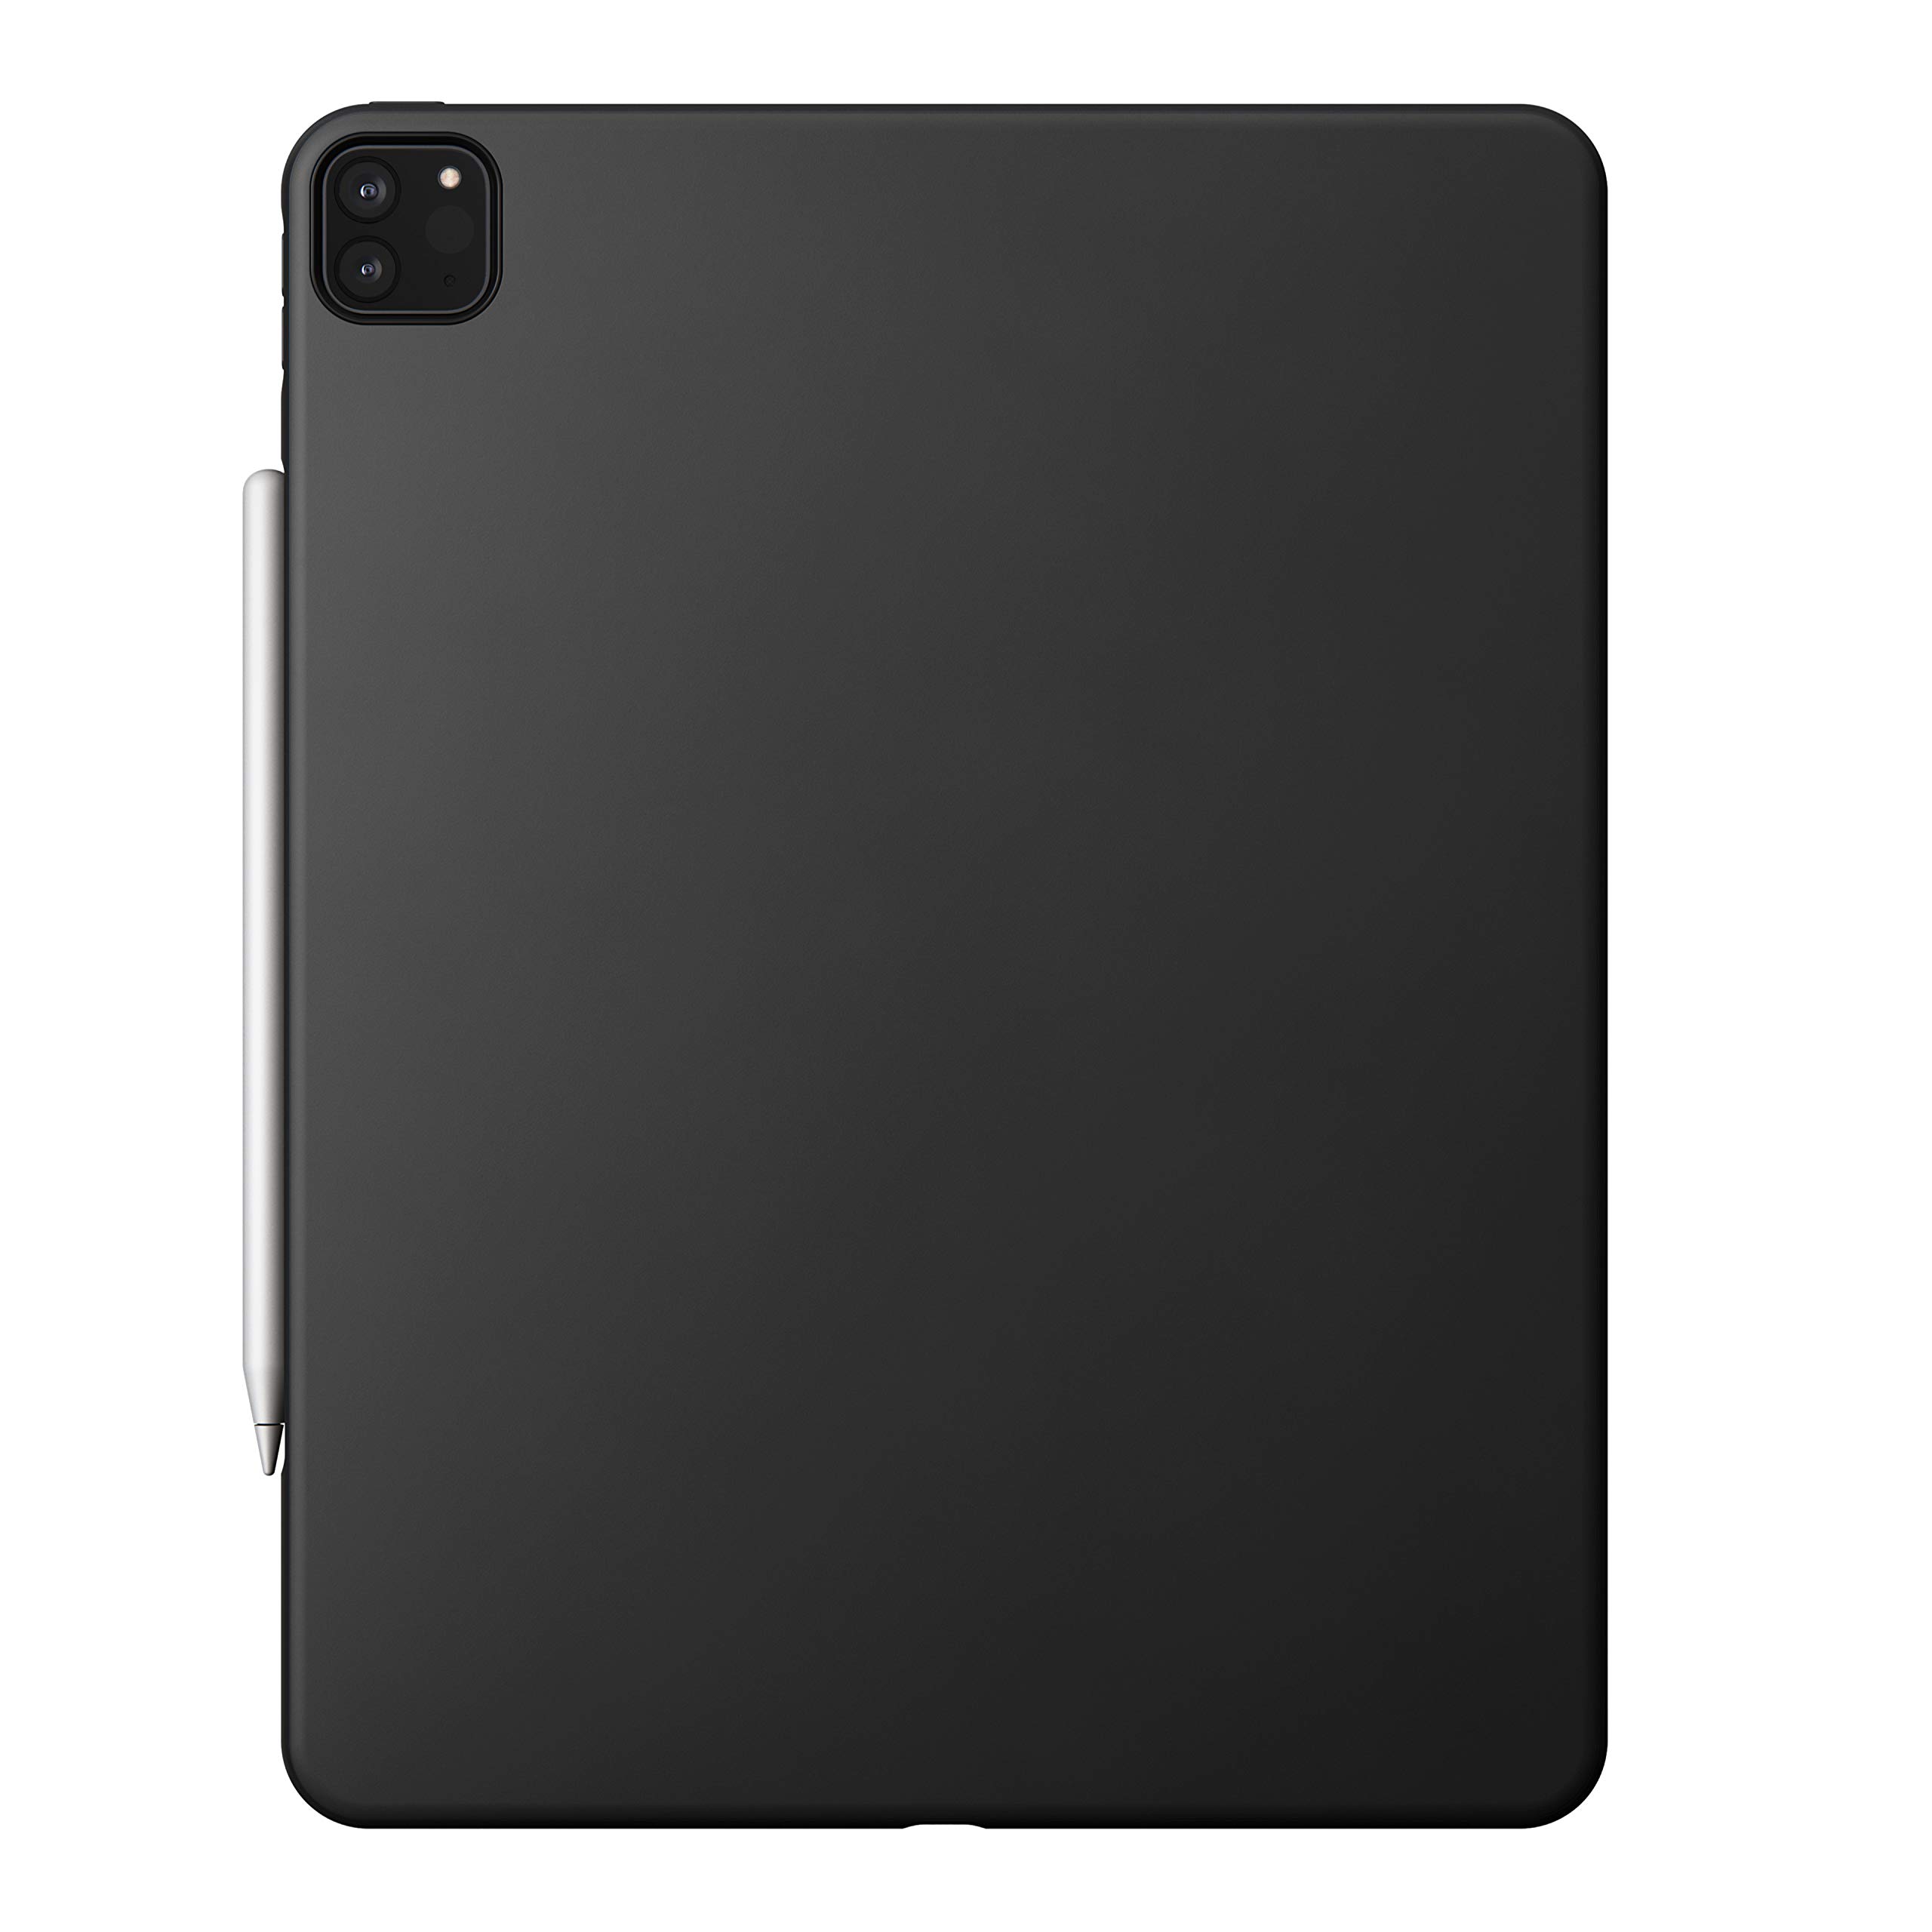 NOMAD Modern Case iPad Pro 12.9 inch (4th Gen) Gray PU